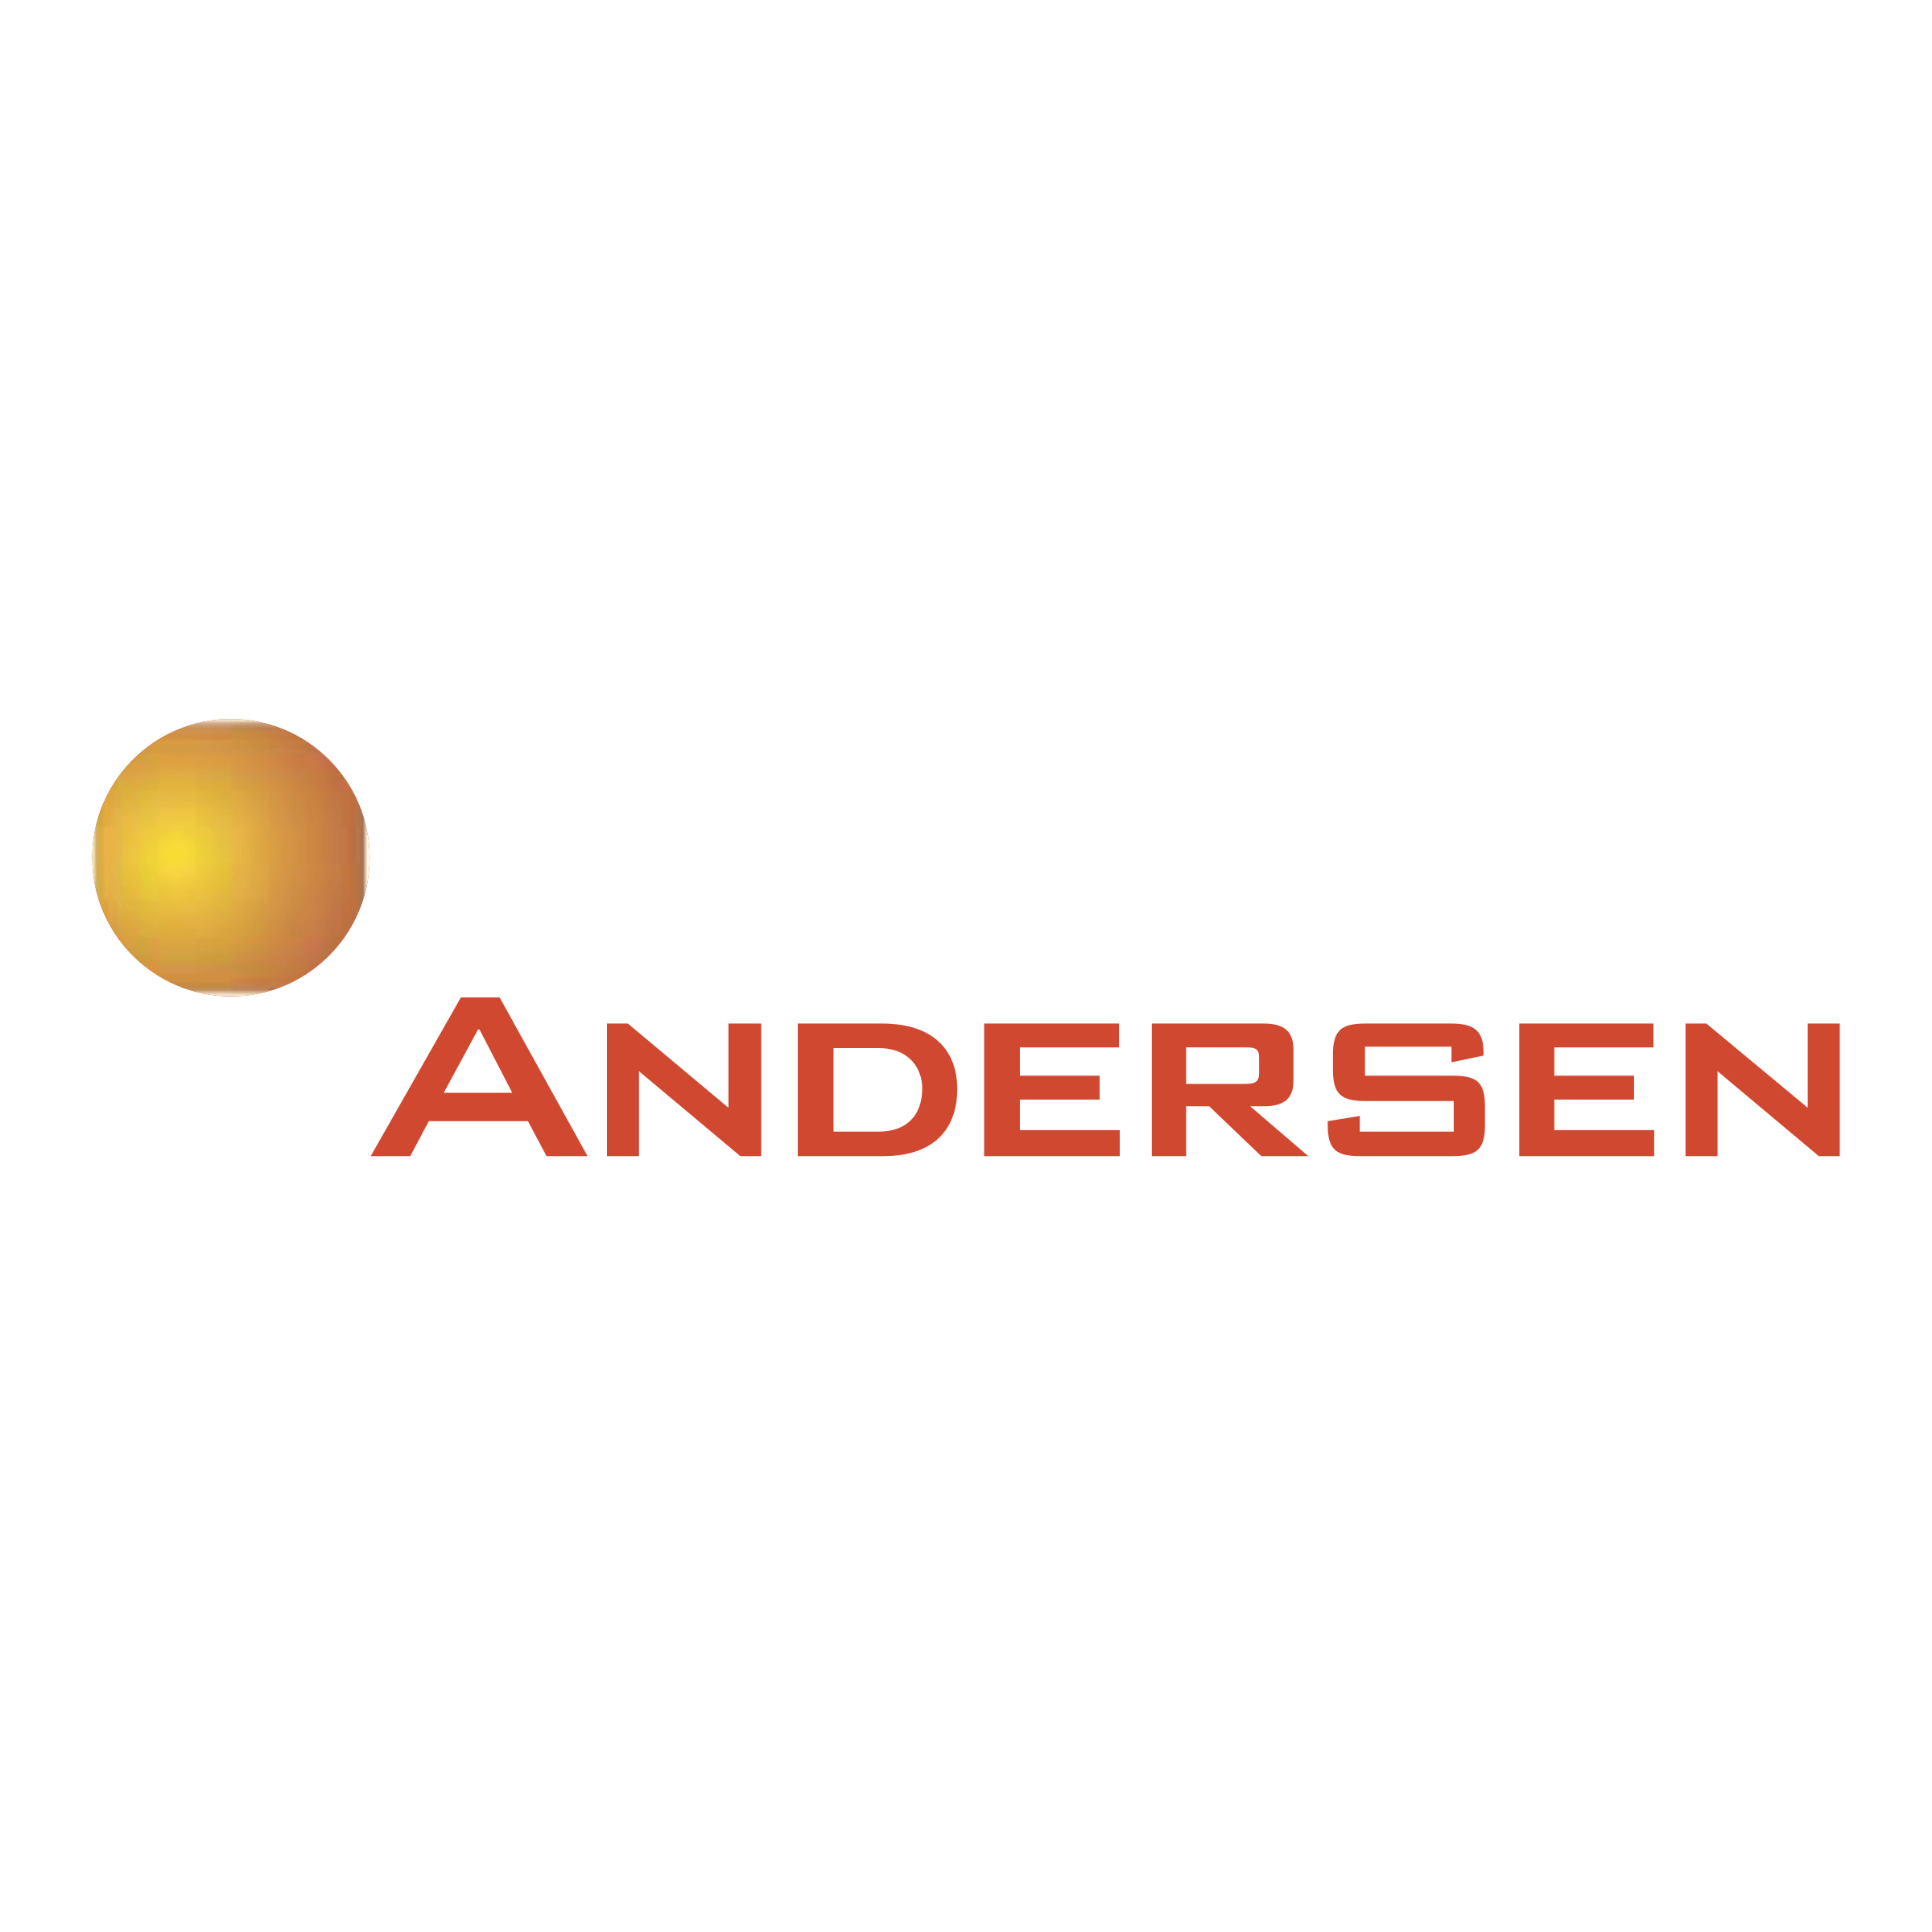 Andersen Logo - Andersen Logo PNG Transparent & SVG Vector - Freebie Supply